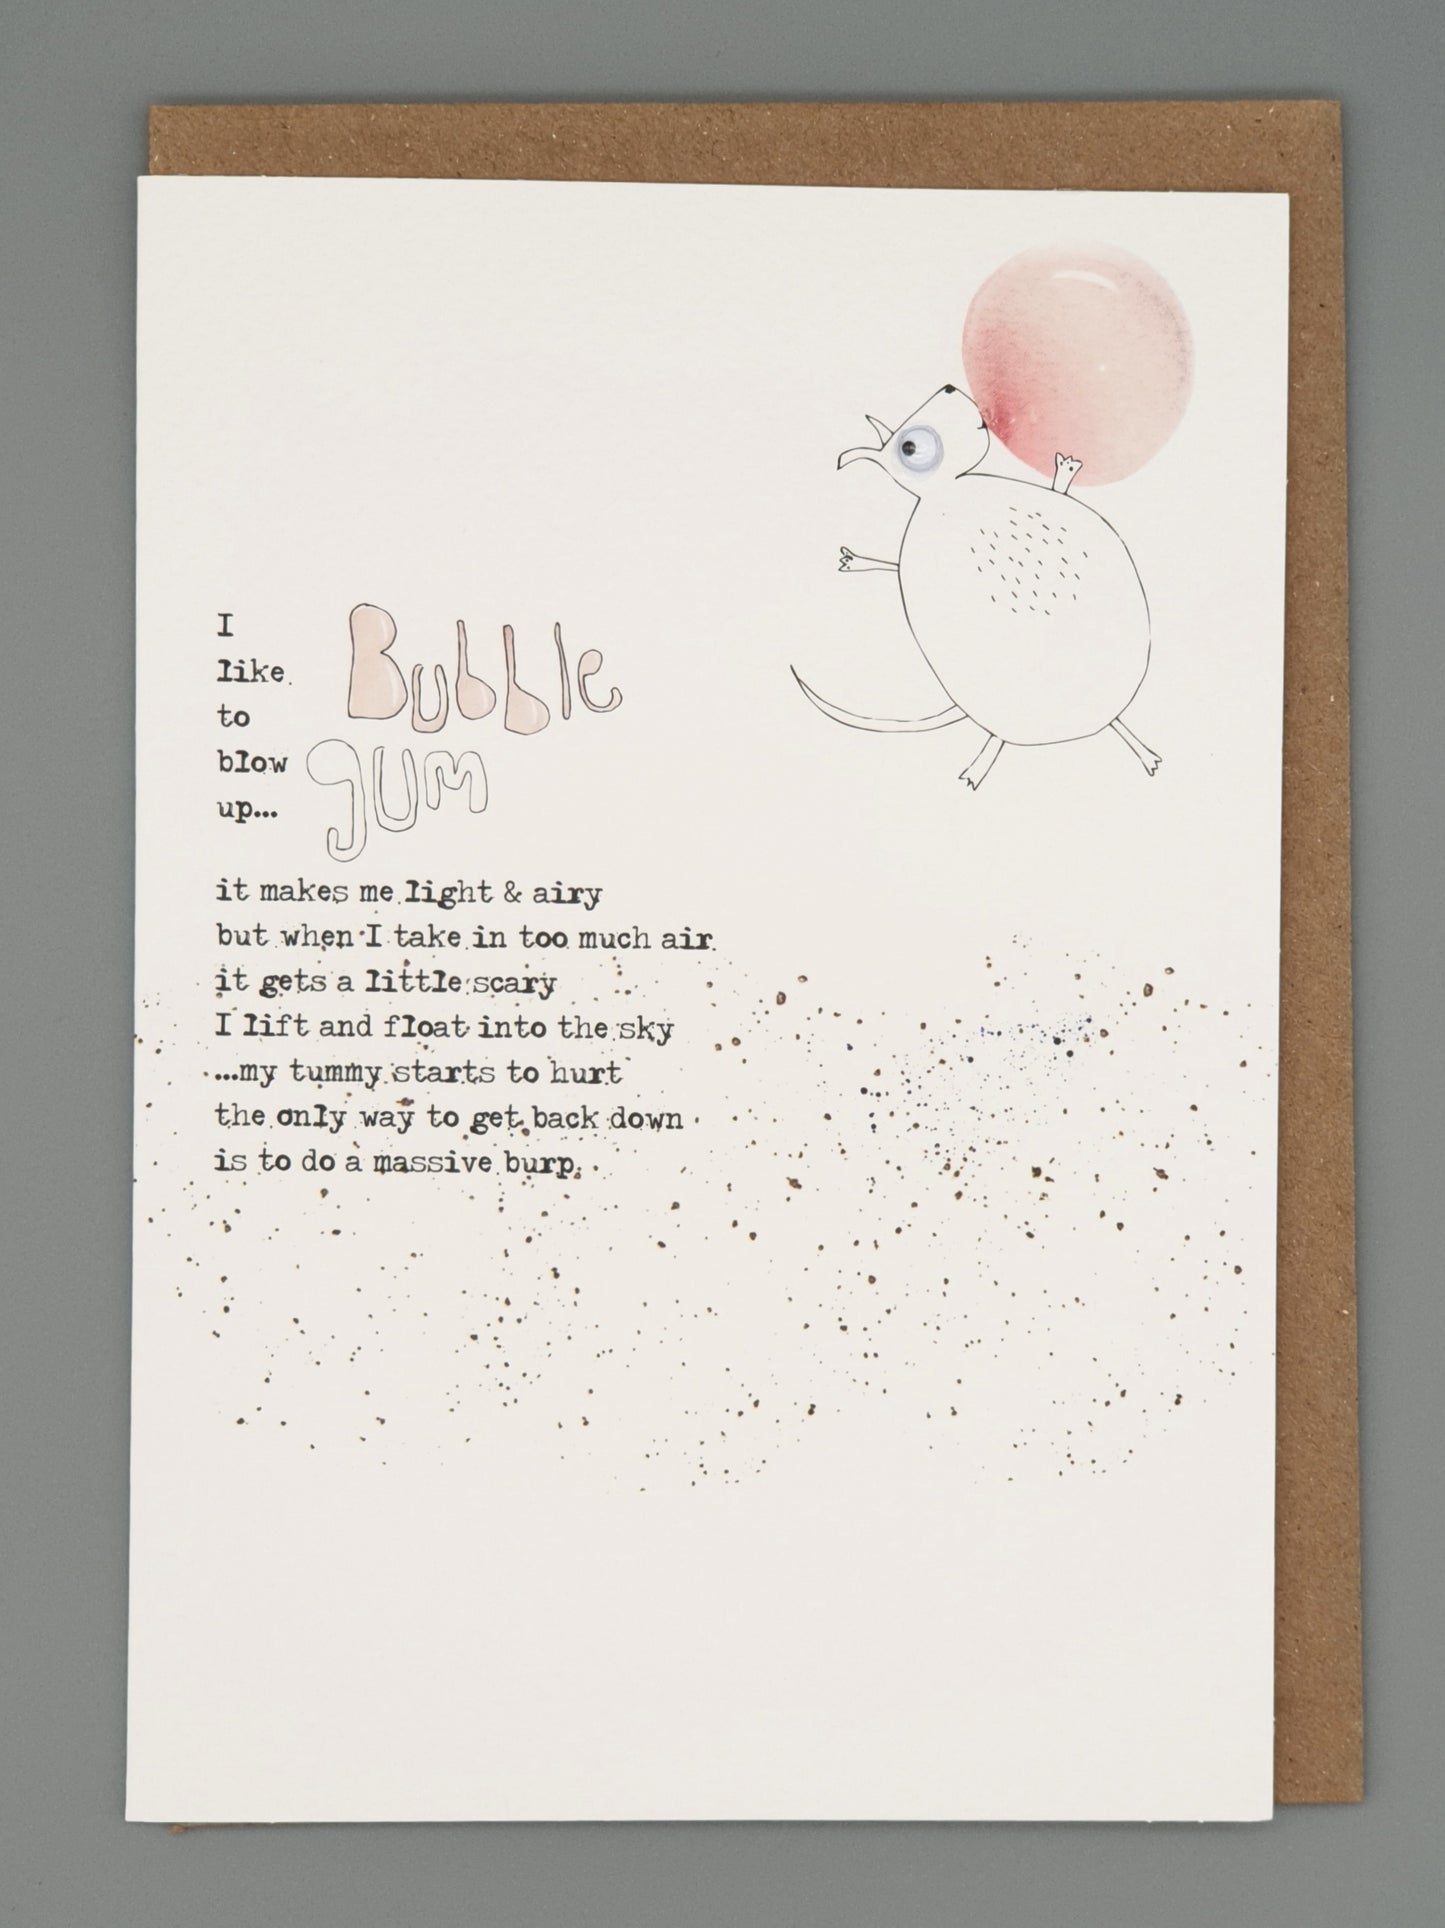 Bubble gum - Greetings card